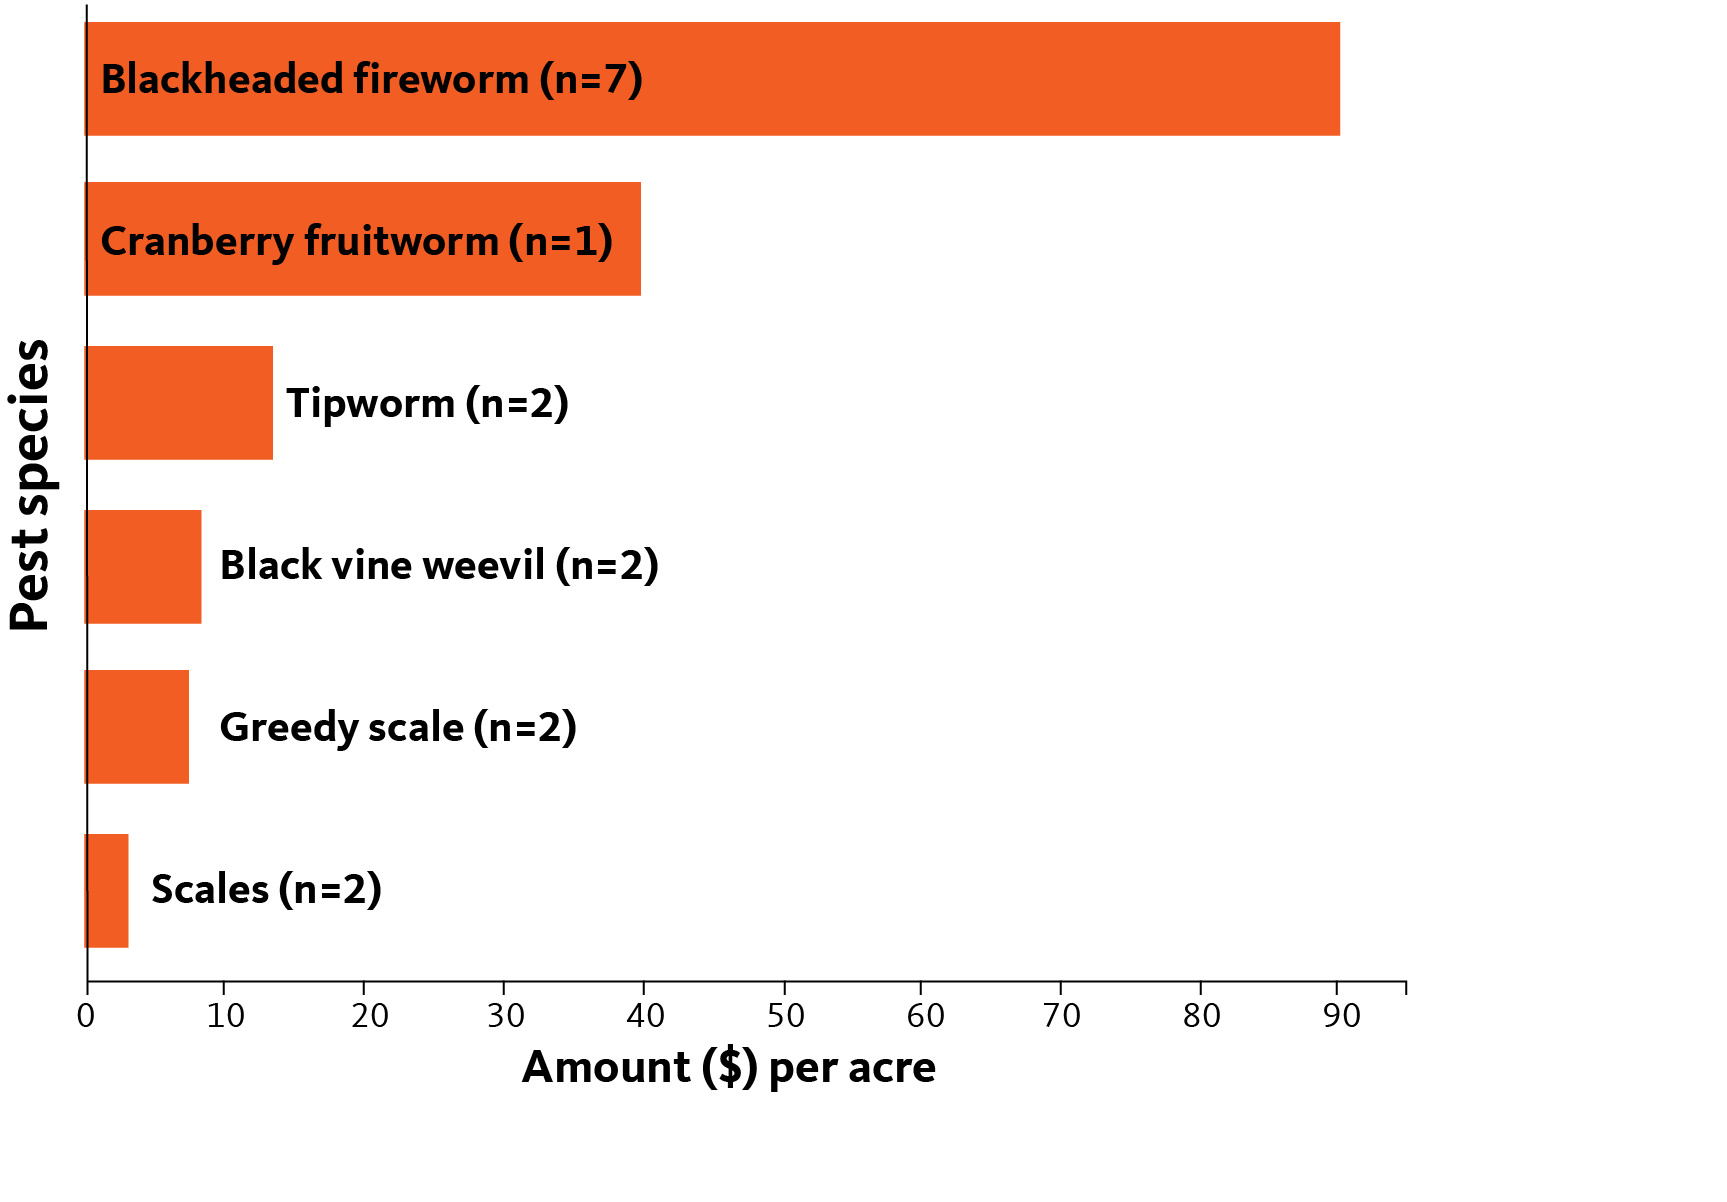 bar chart showing blackheaded fireworm leading invertebrate pest